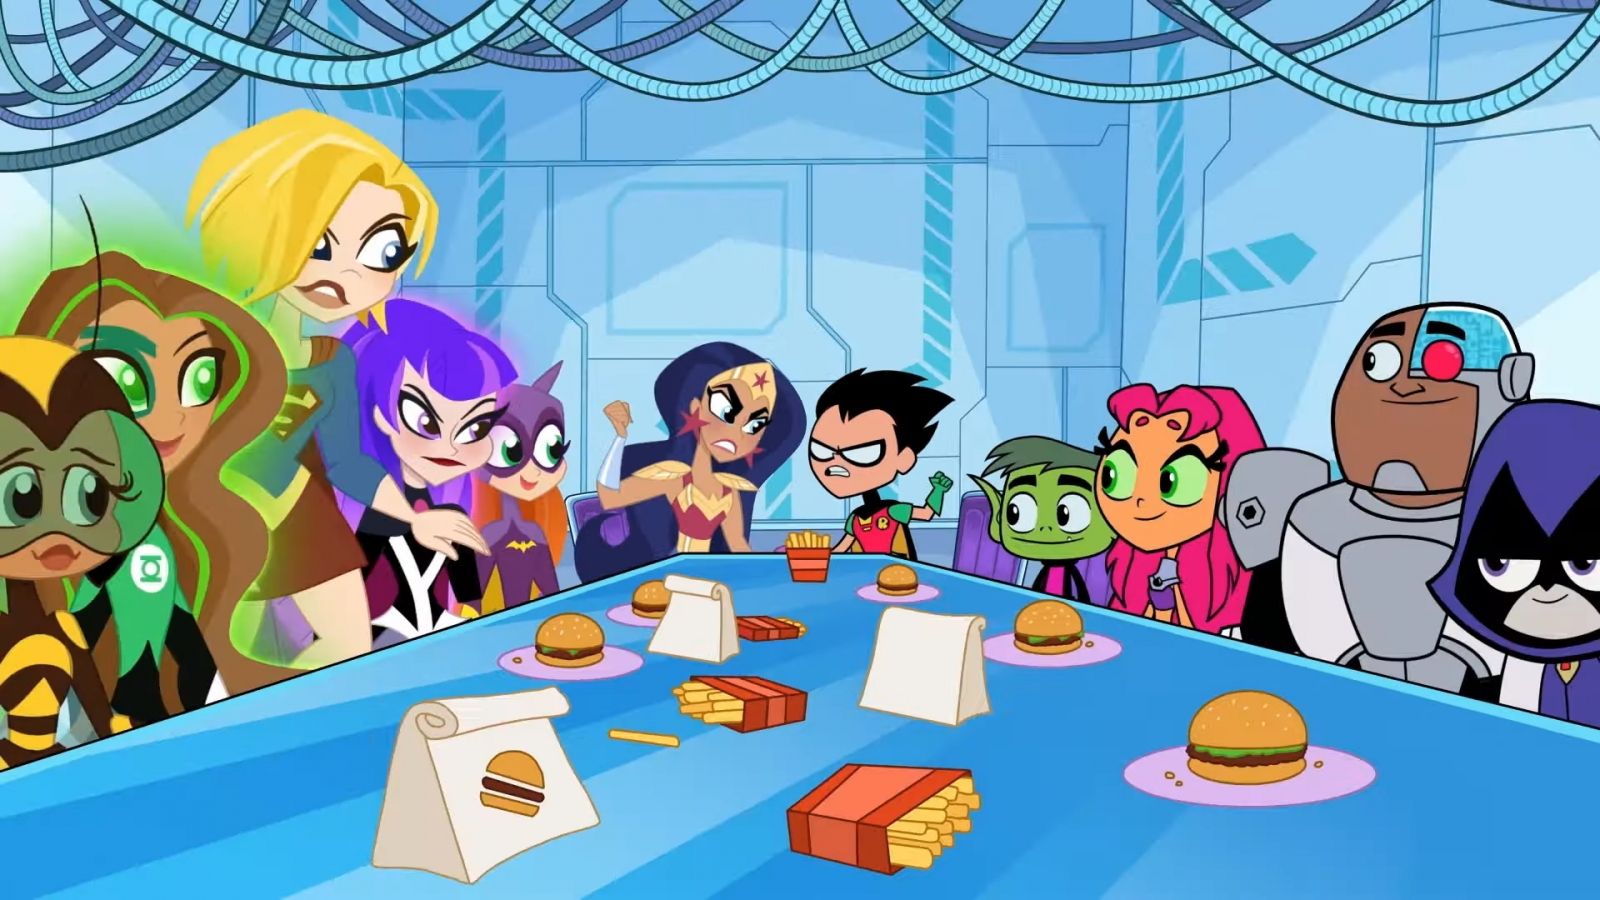 Teen Titans Go! & DC Super Hero Girls: Mayhem in the Multiverse animated  movie trailer released